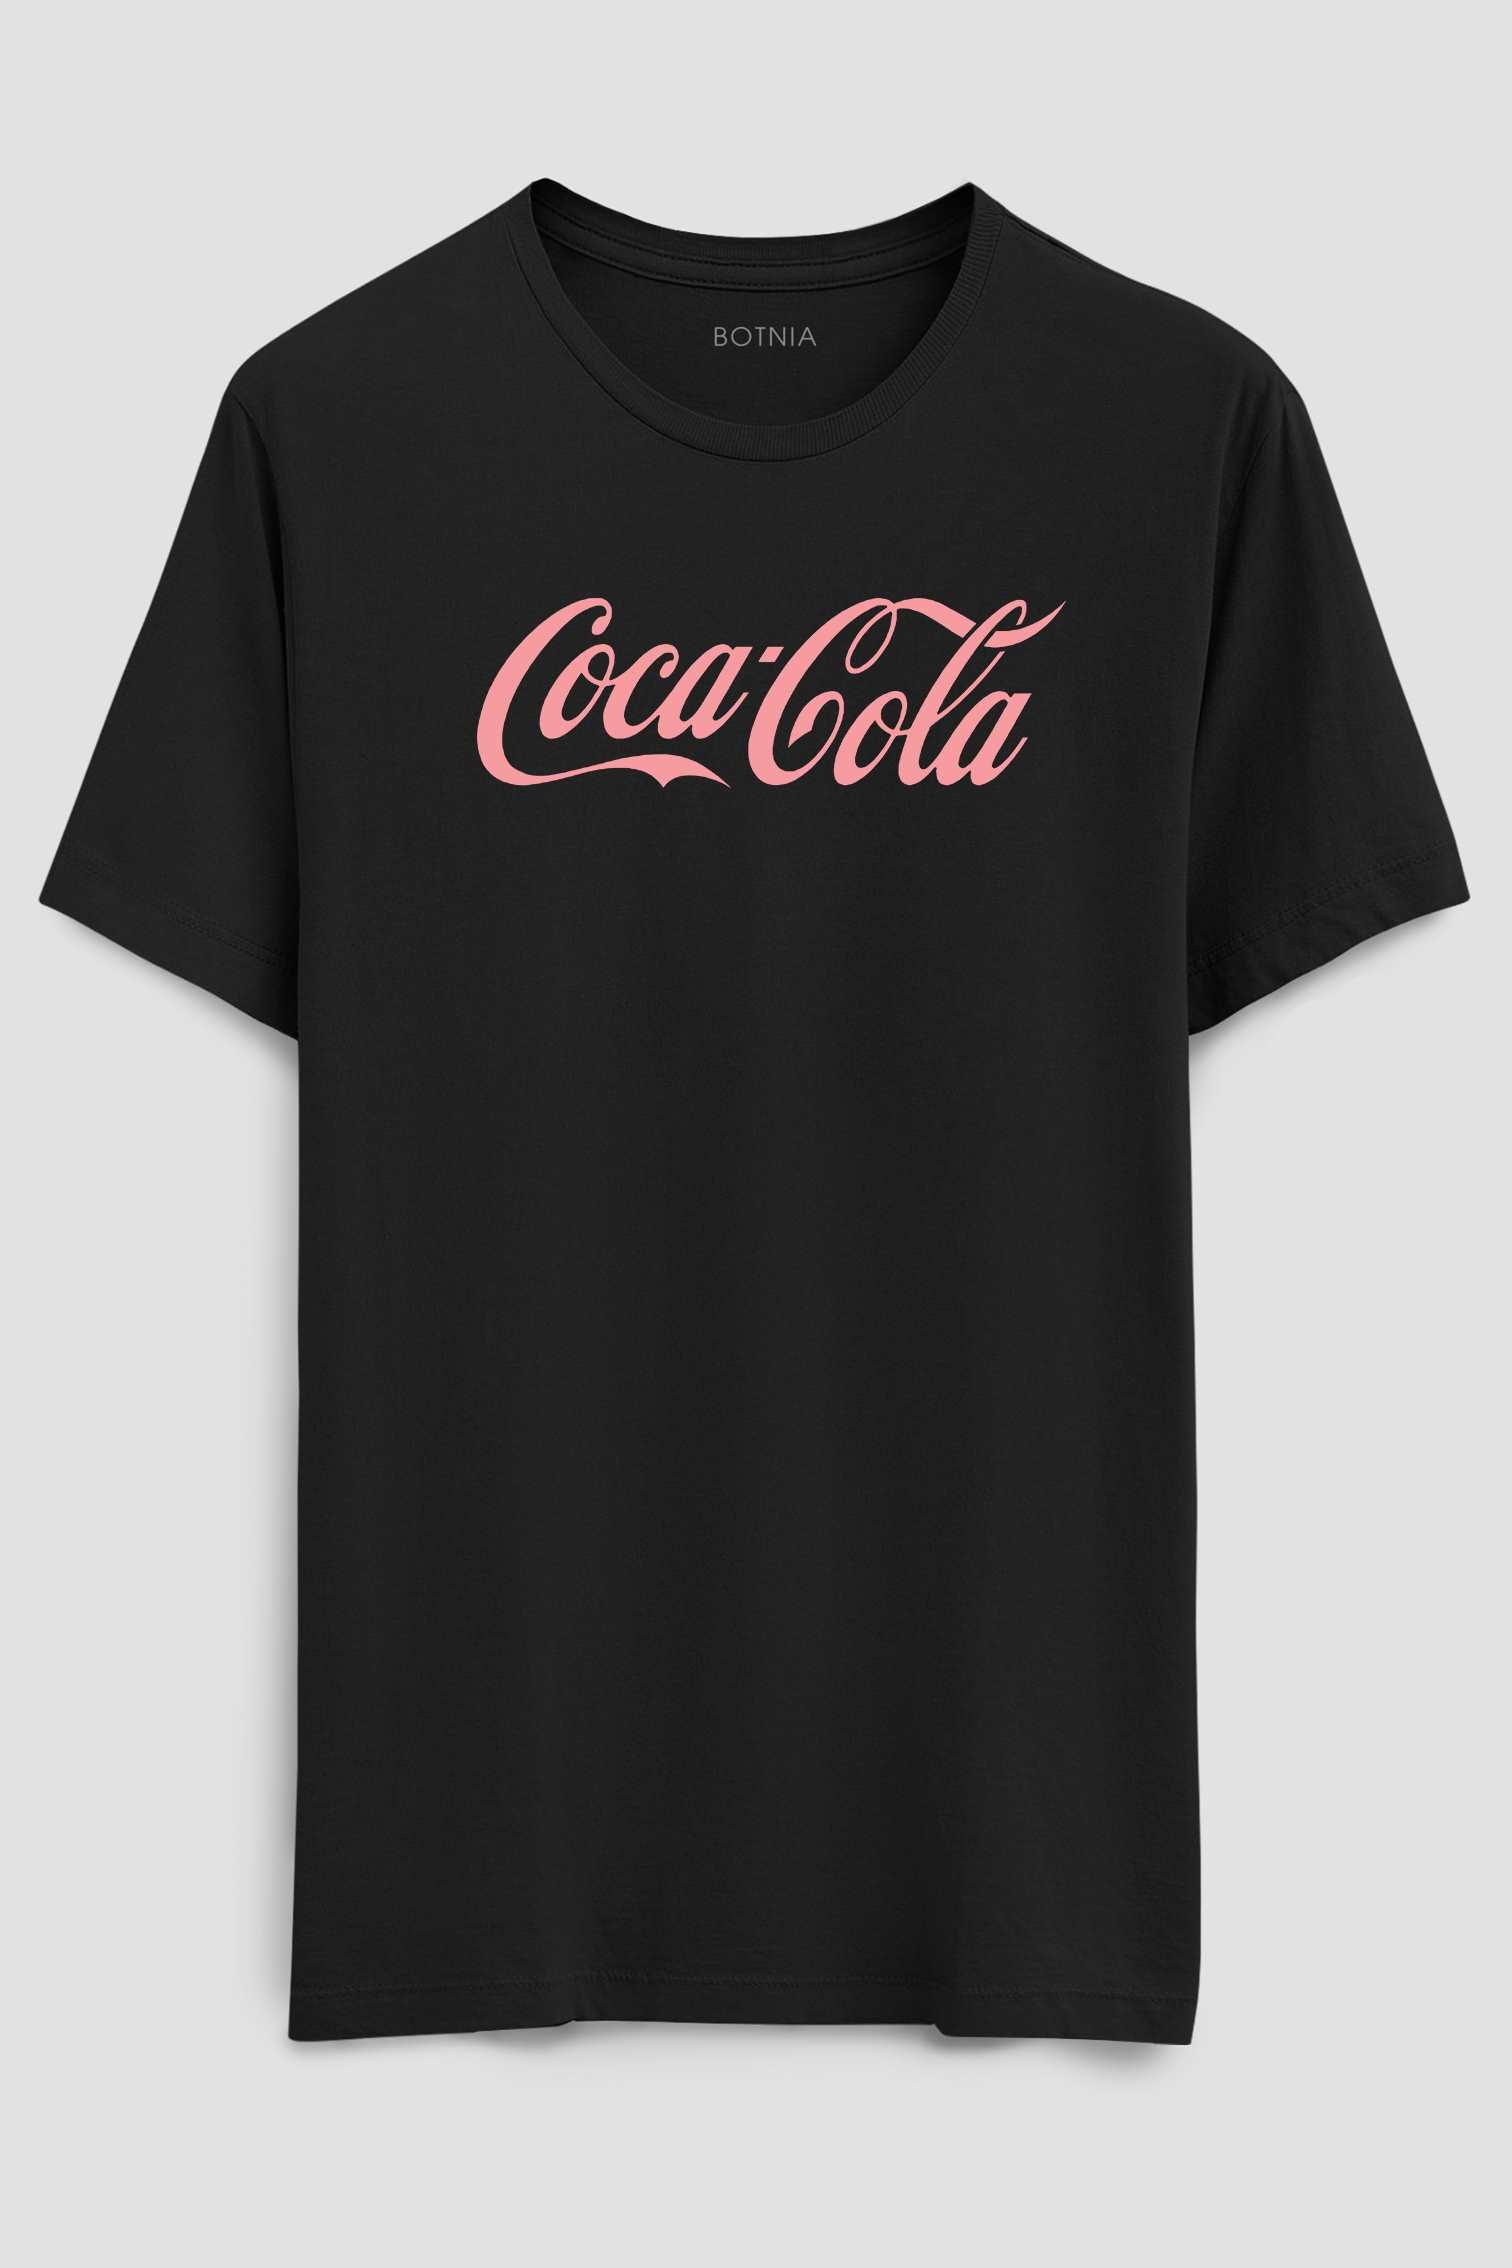 Coca-Cola Half sleeve t-shirt